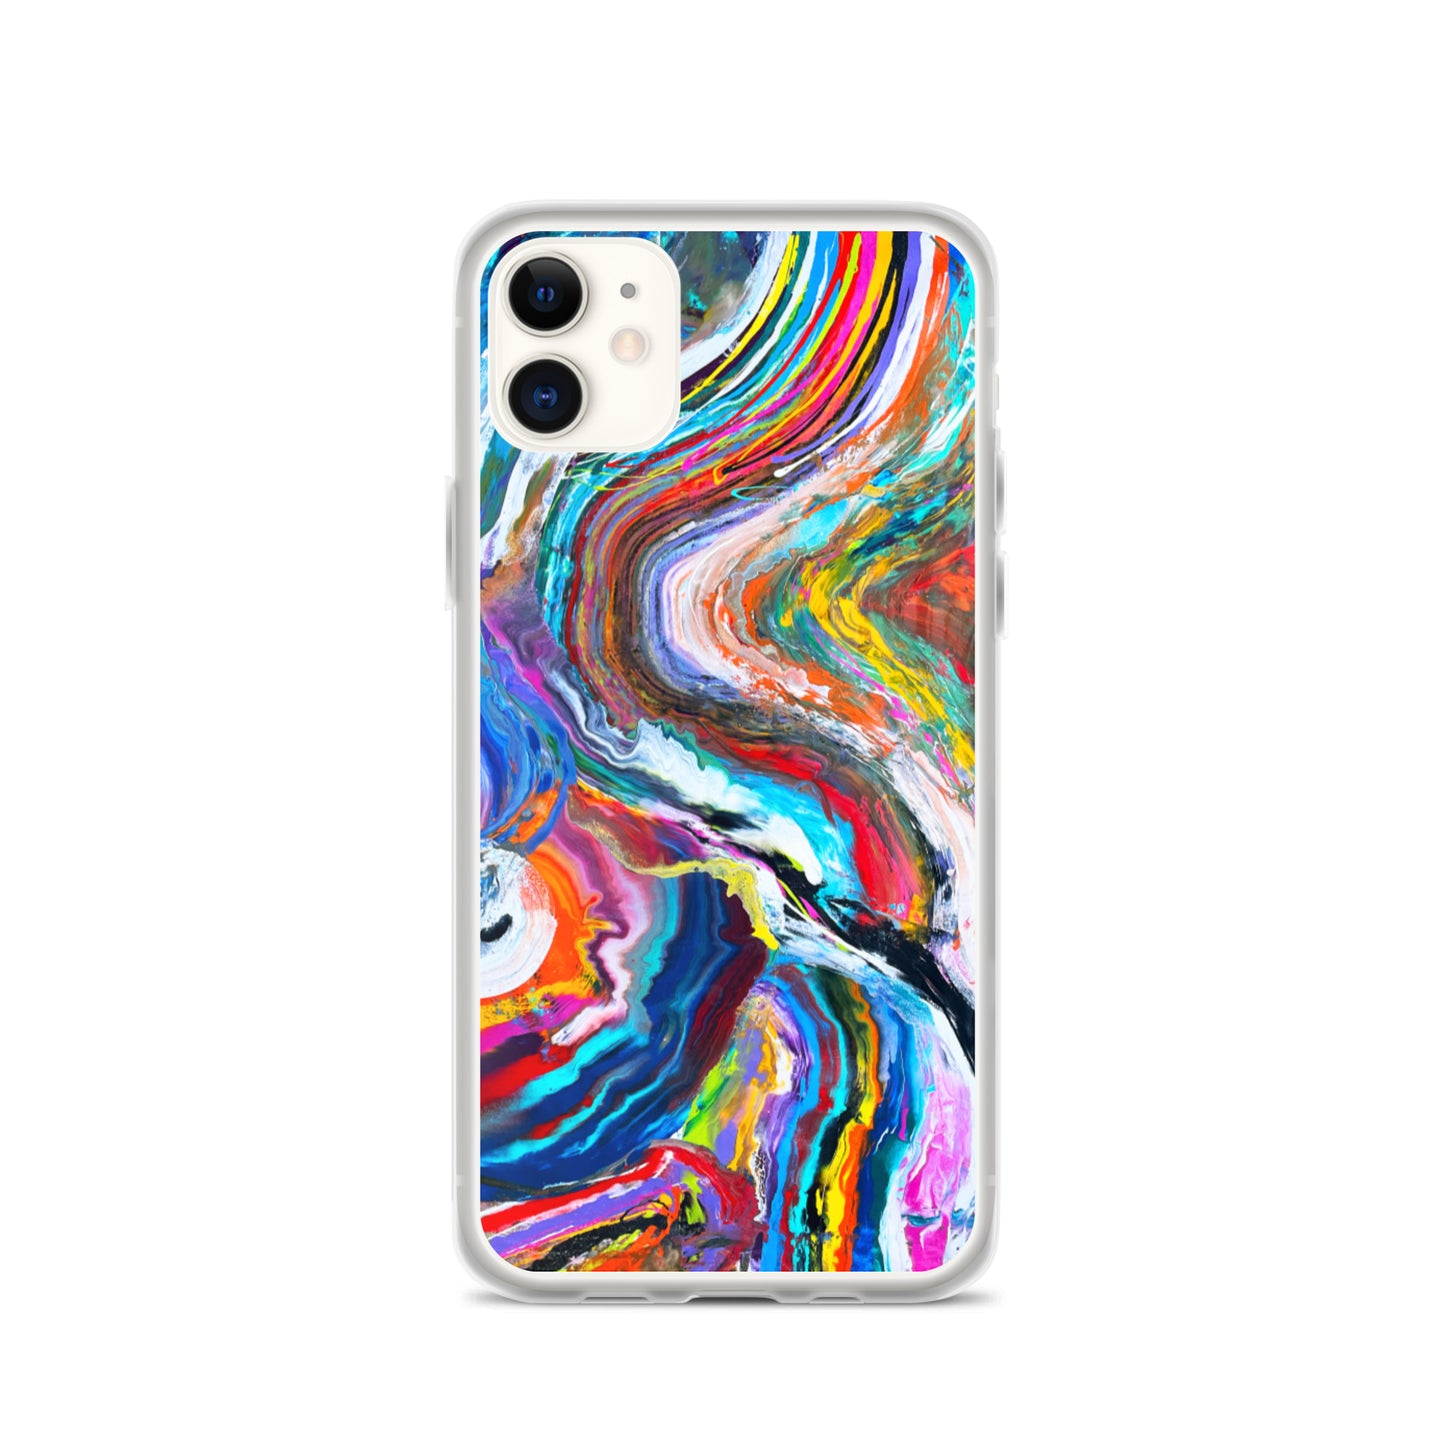 Capa para iPhone - design de onda de arco-íris